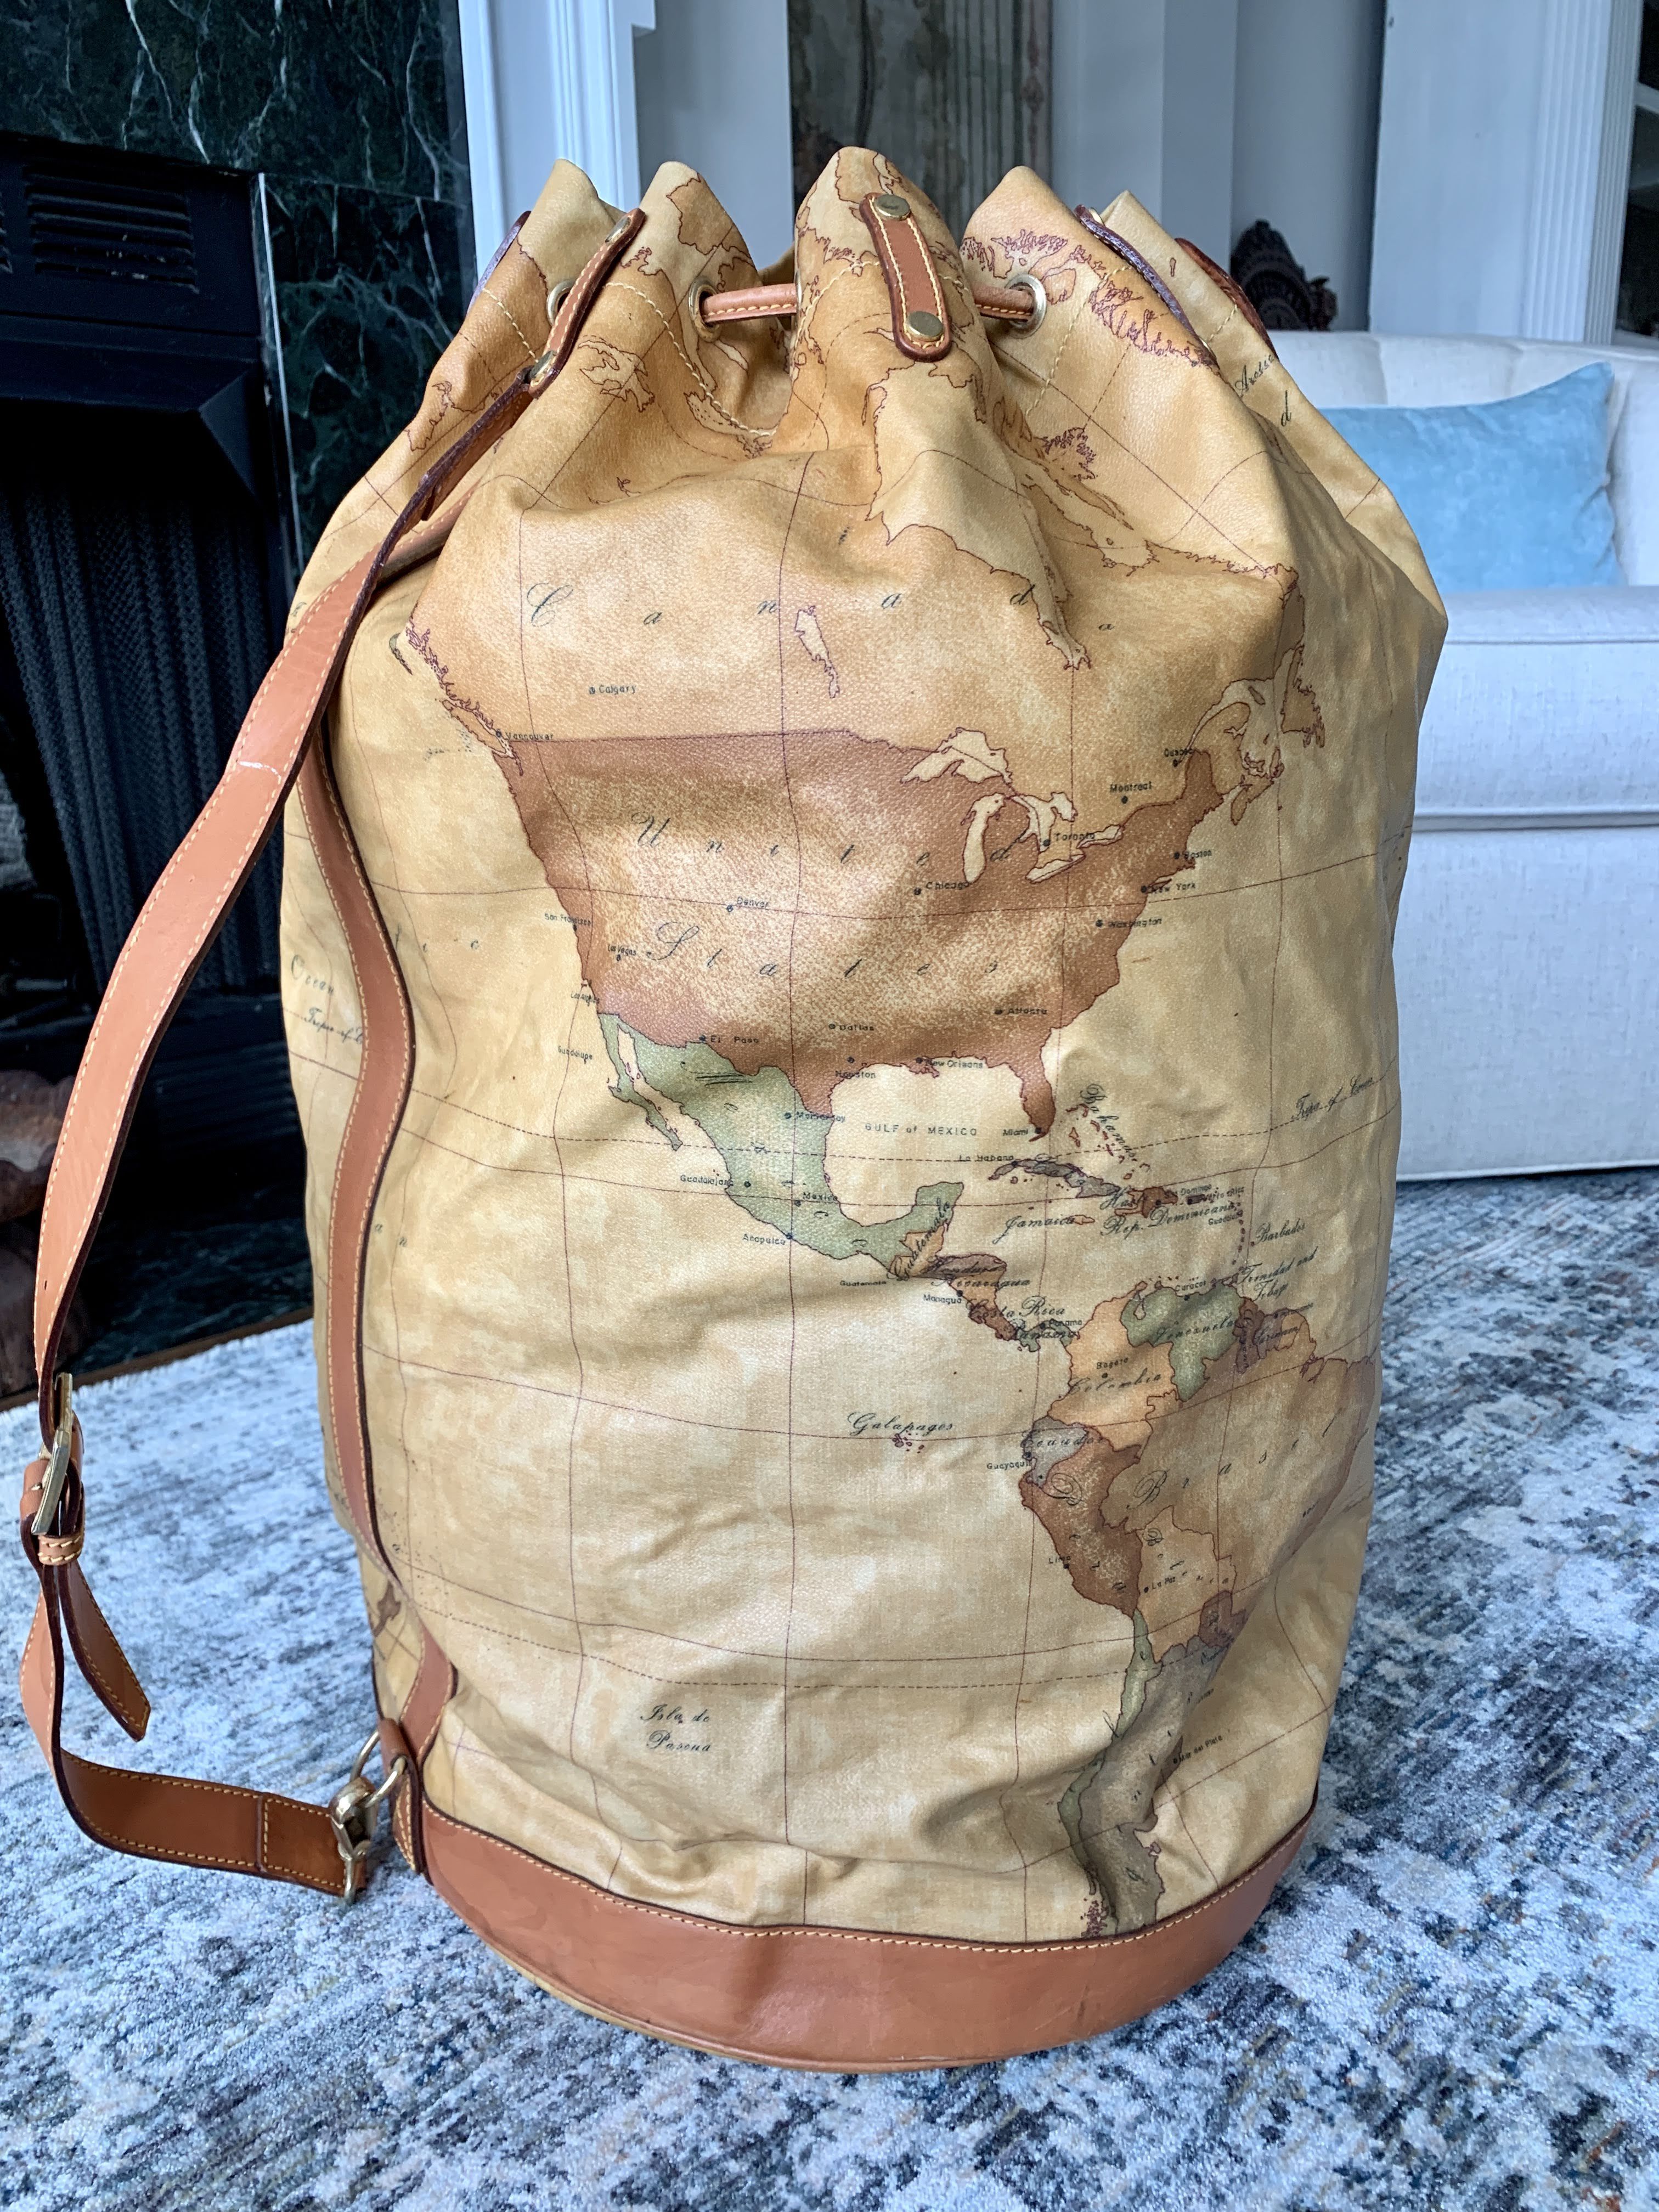 Italian Leather Large Duffel Bag by Alviero Martini